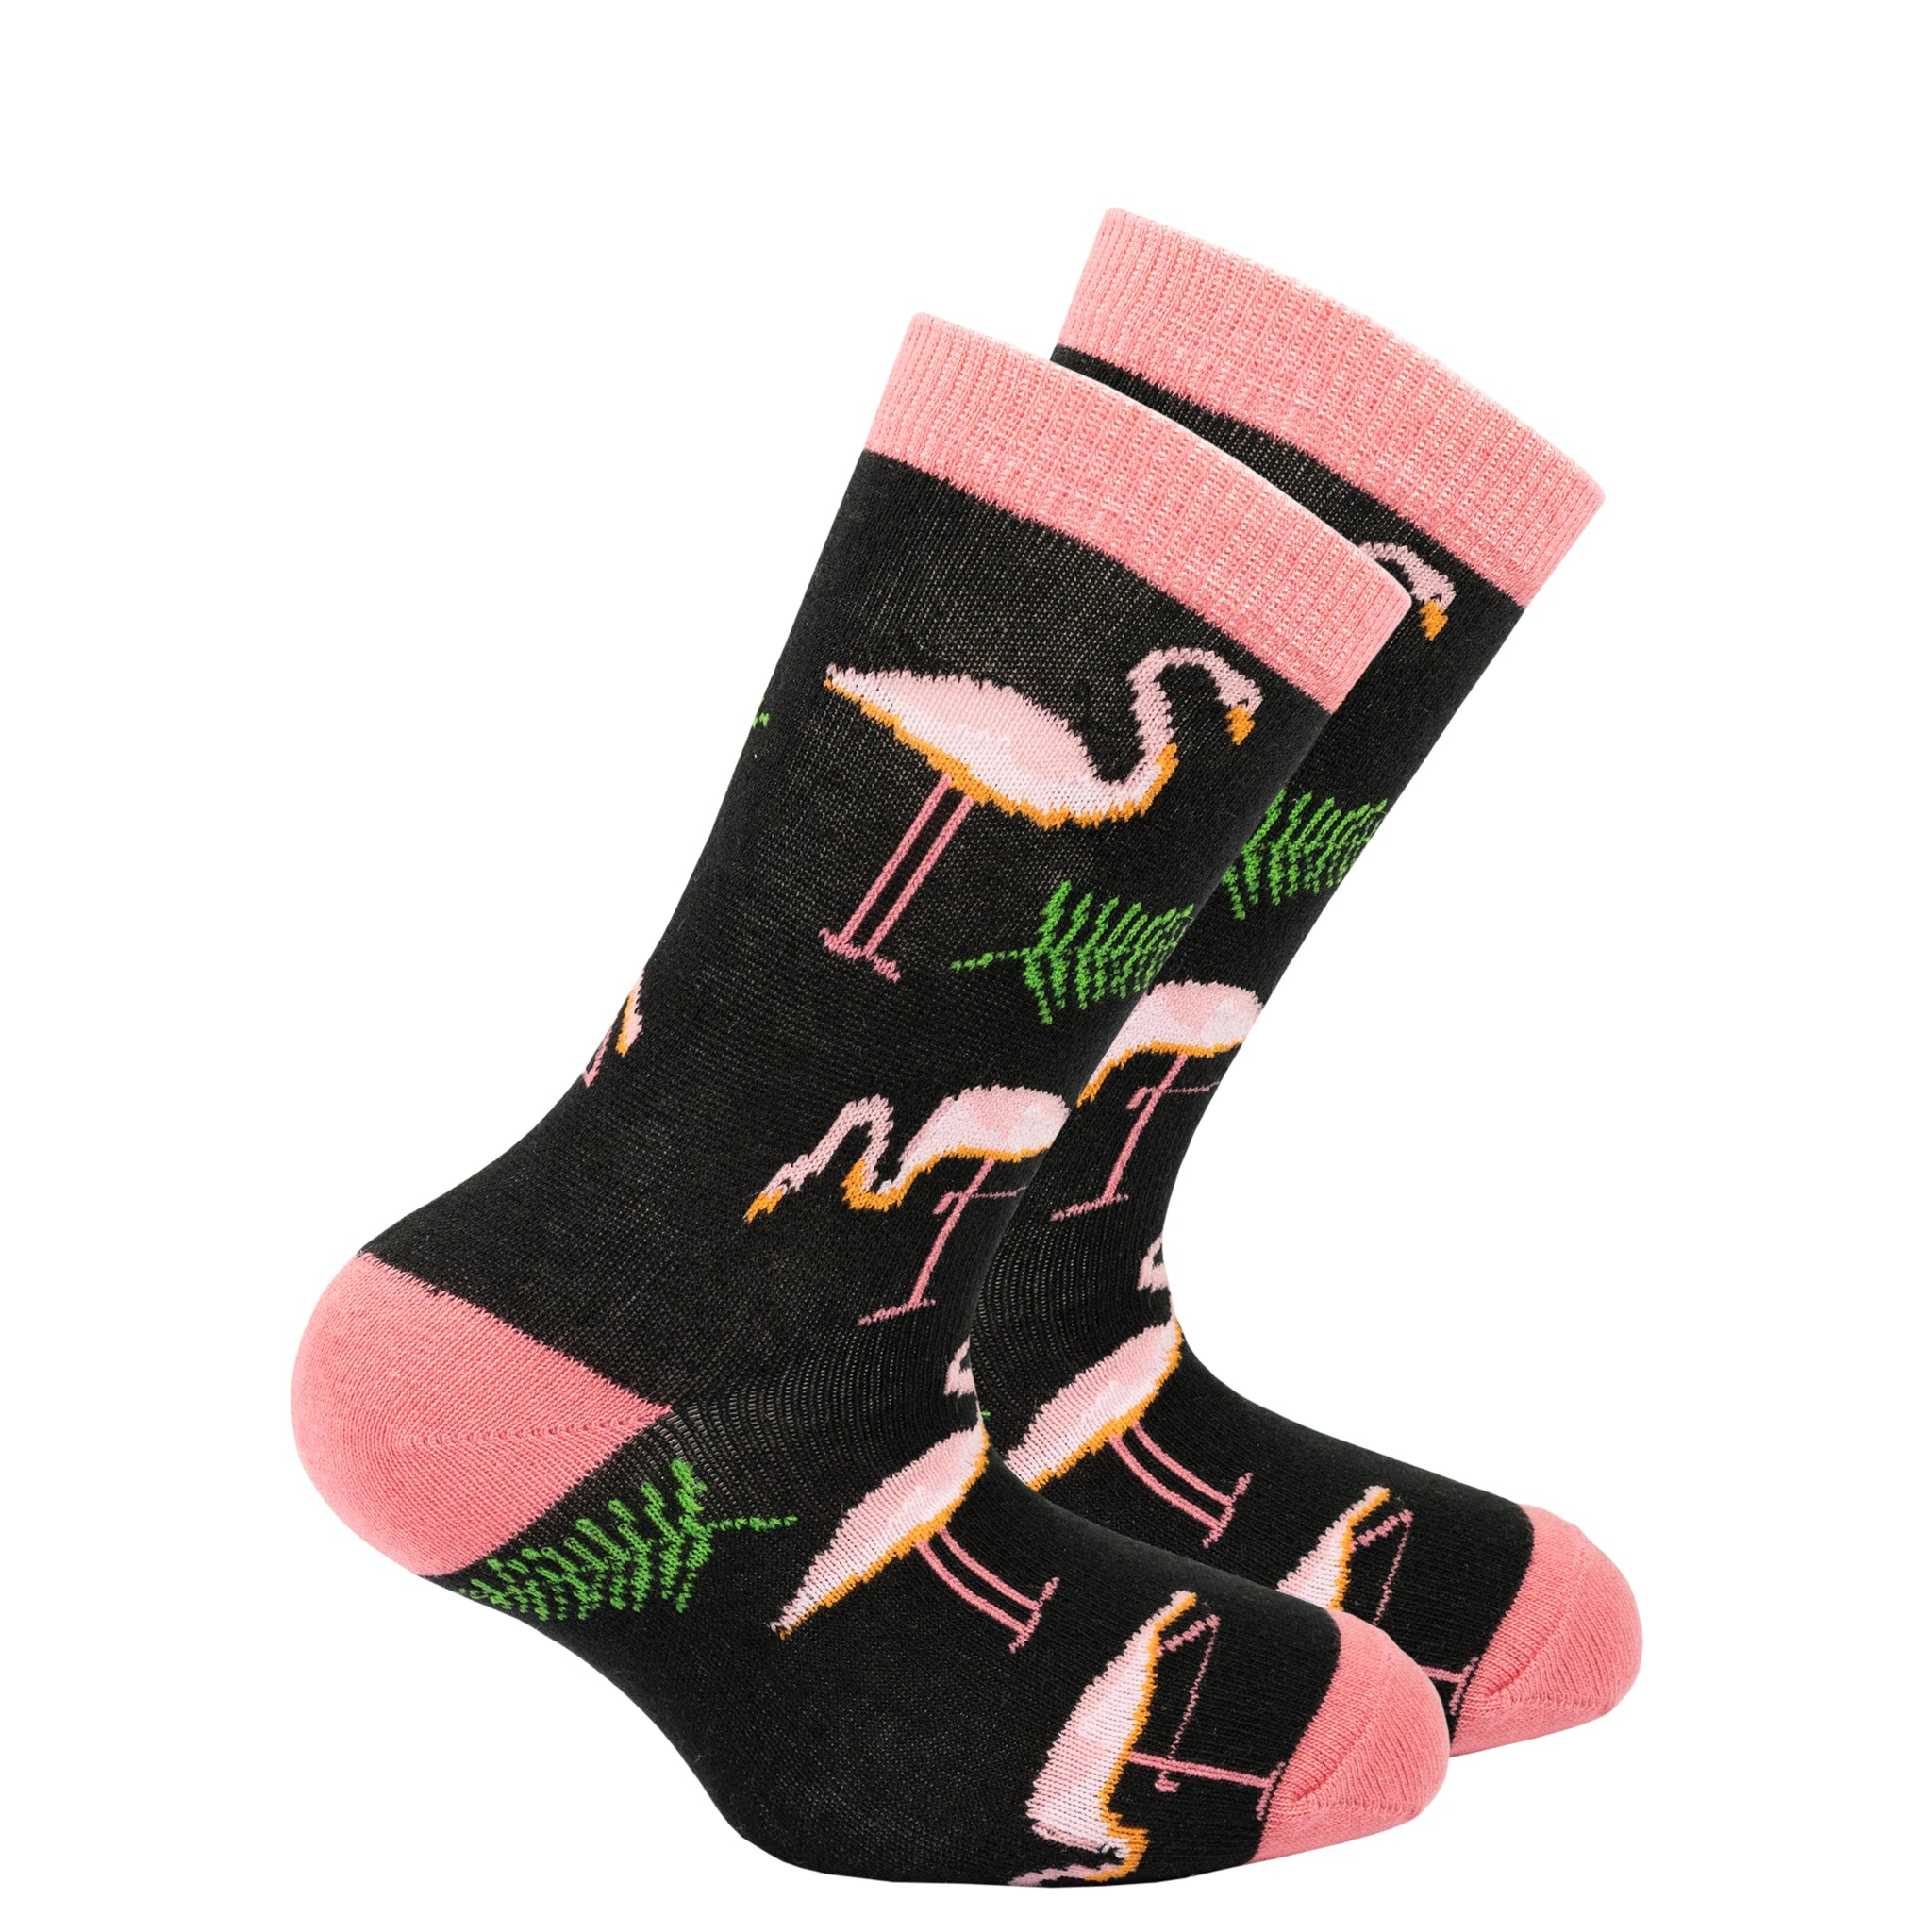 Kids Flamingo Socks pink and black